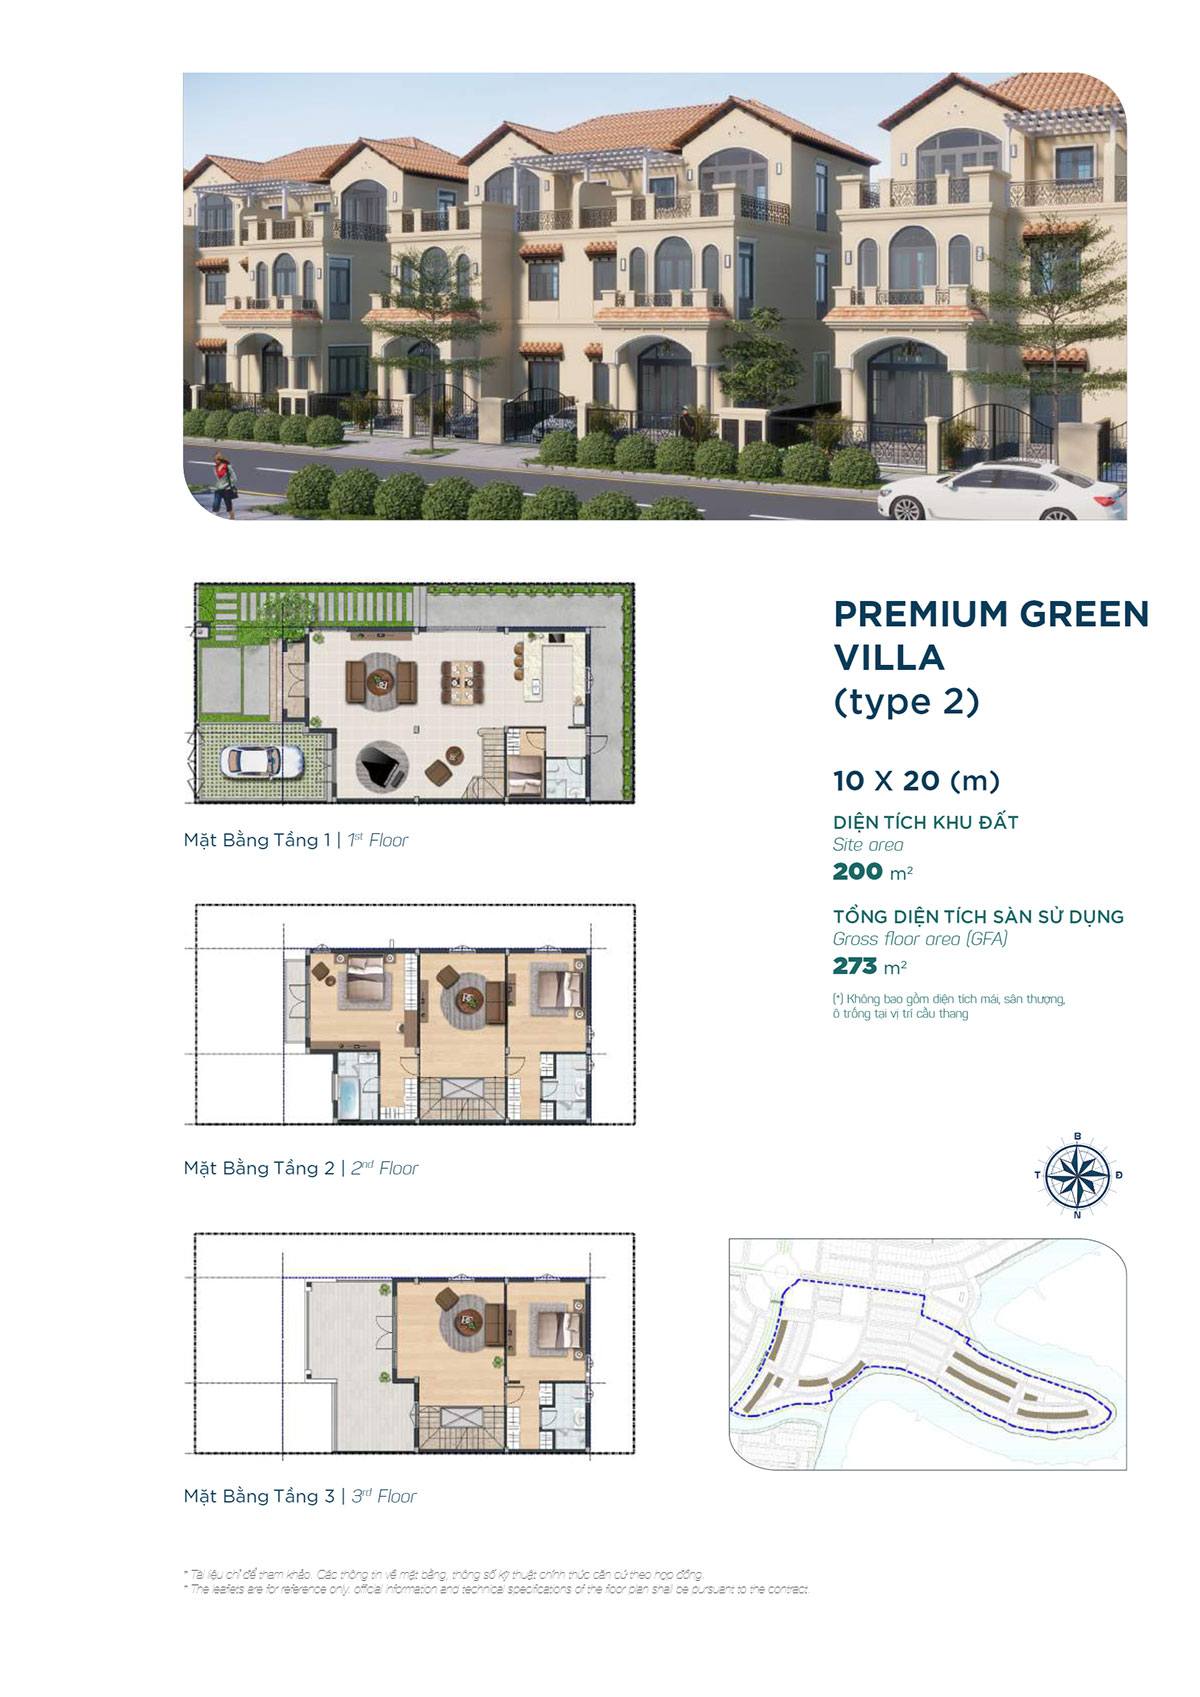 Layout Premium Green Villa (type 2)